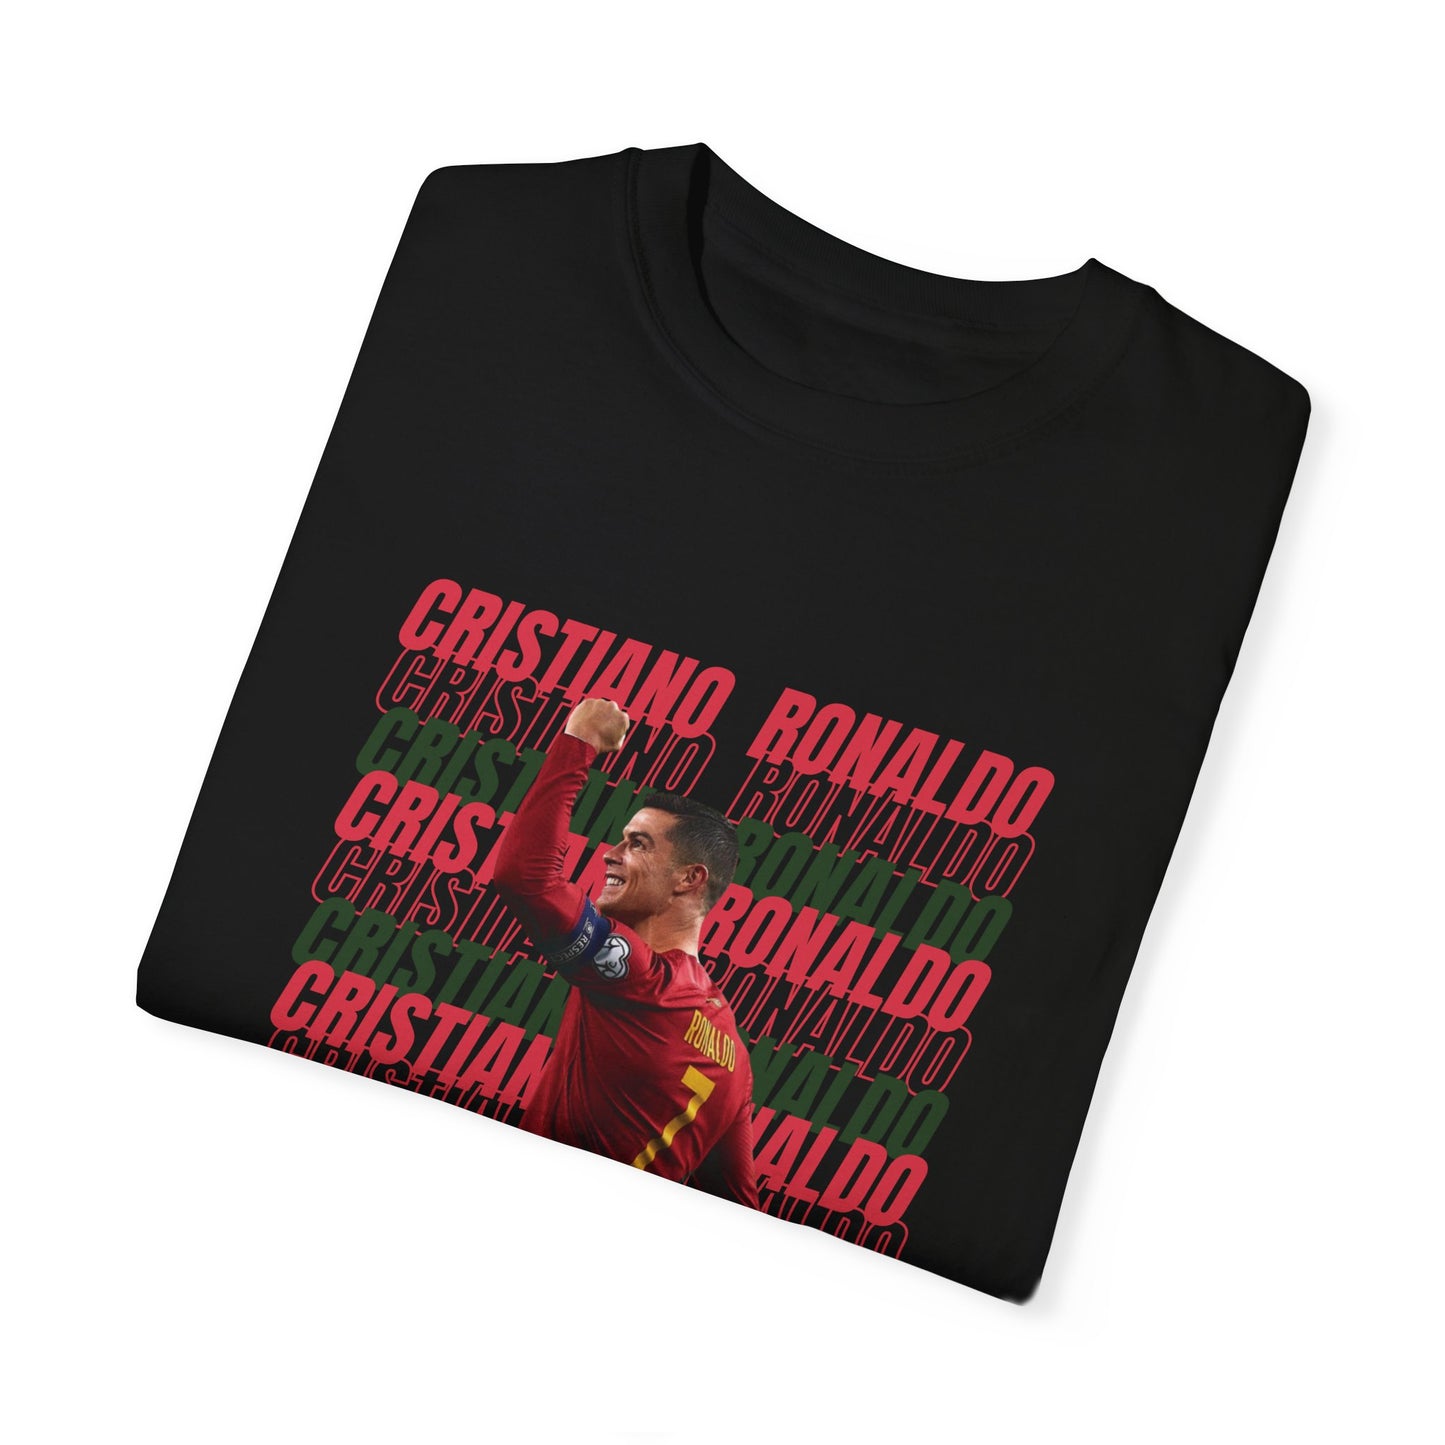 Cristiano Ronaldo T-Shirt